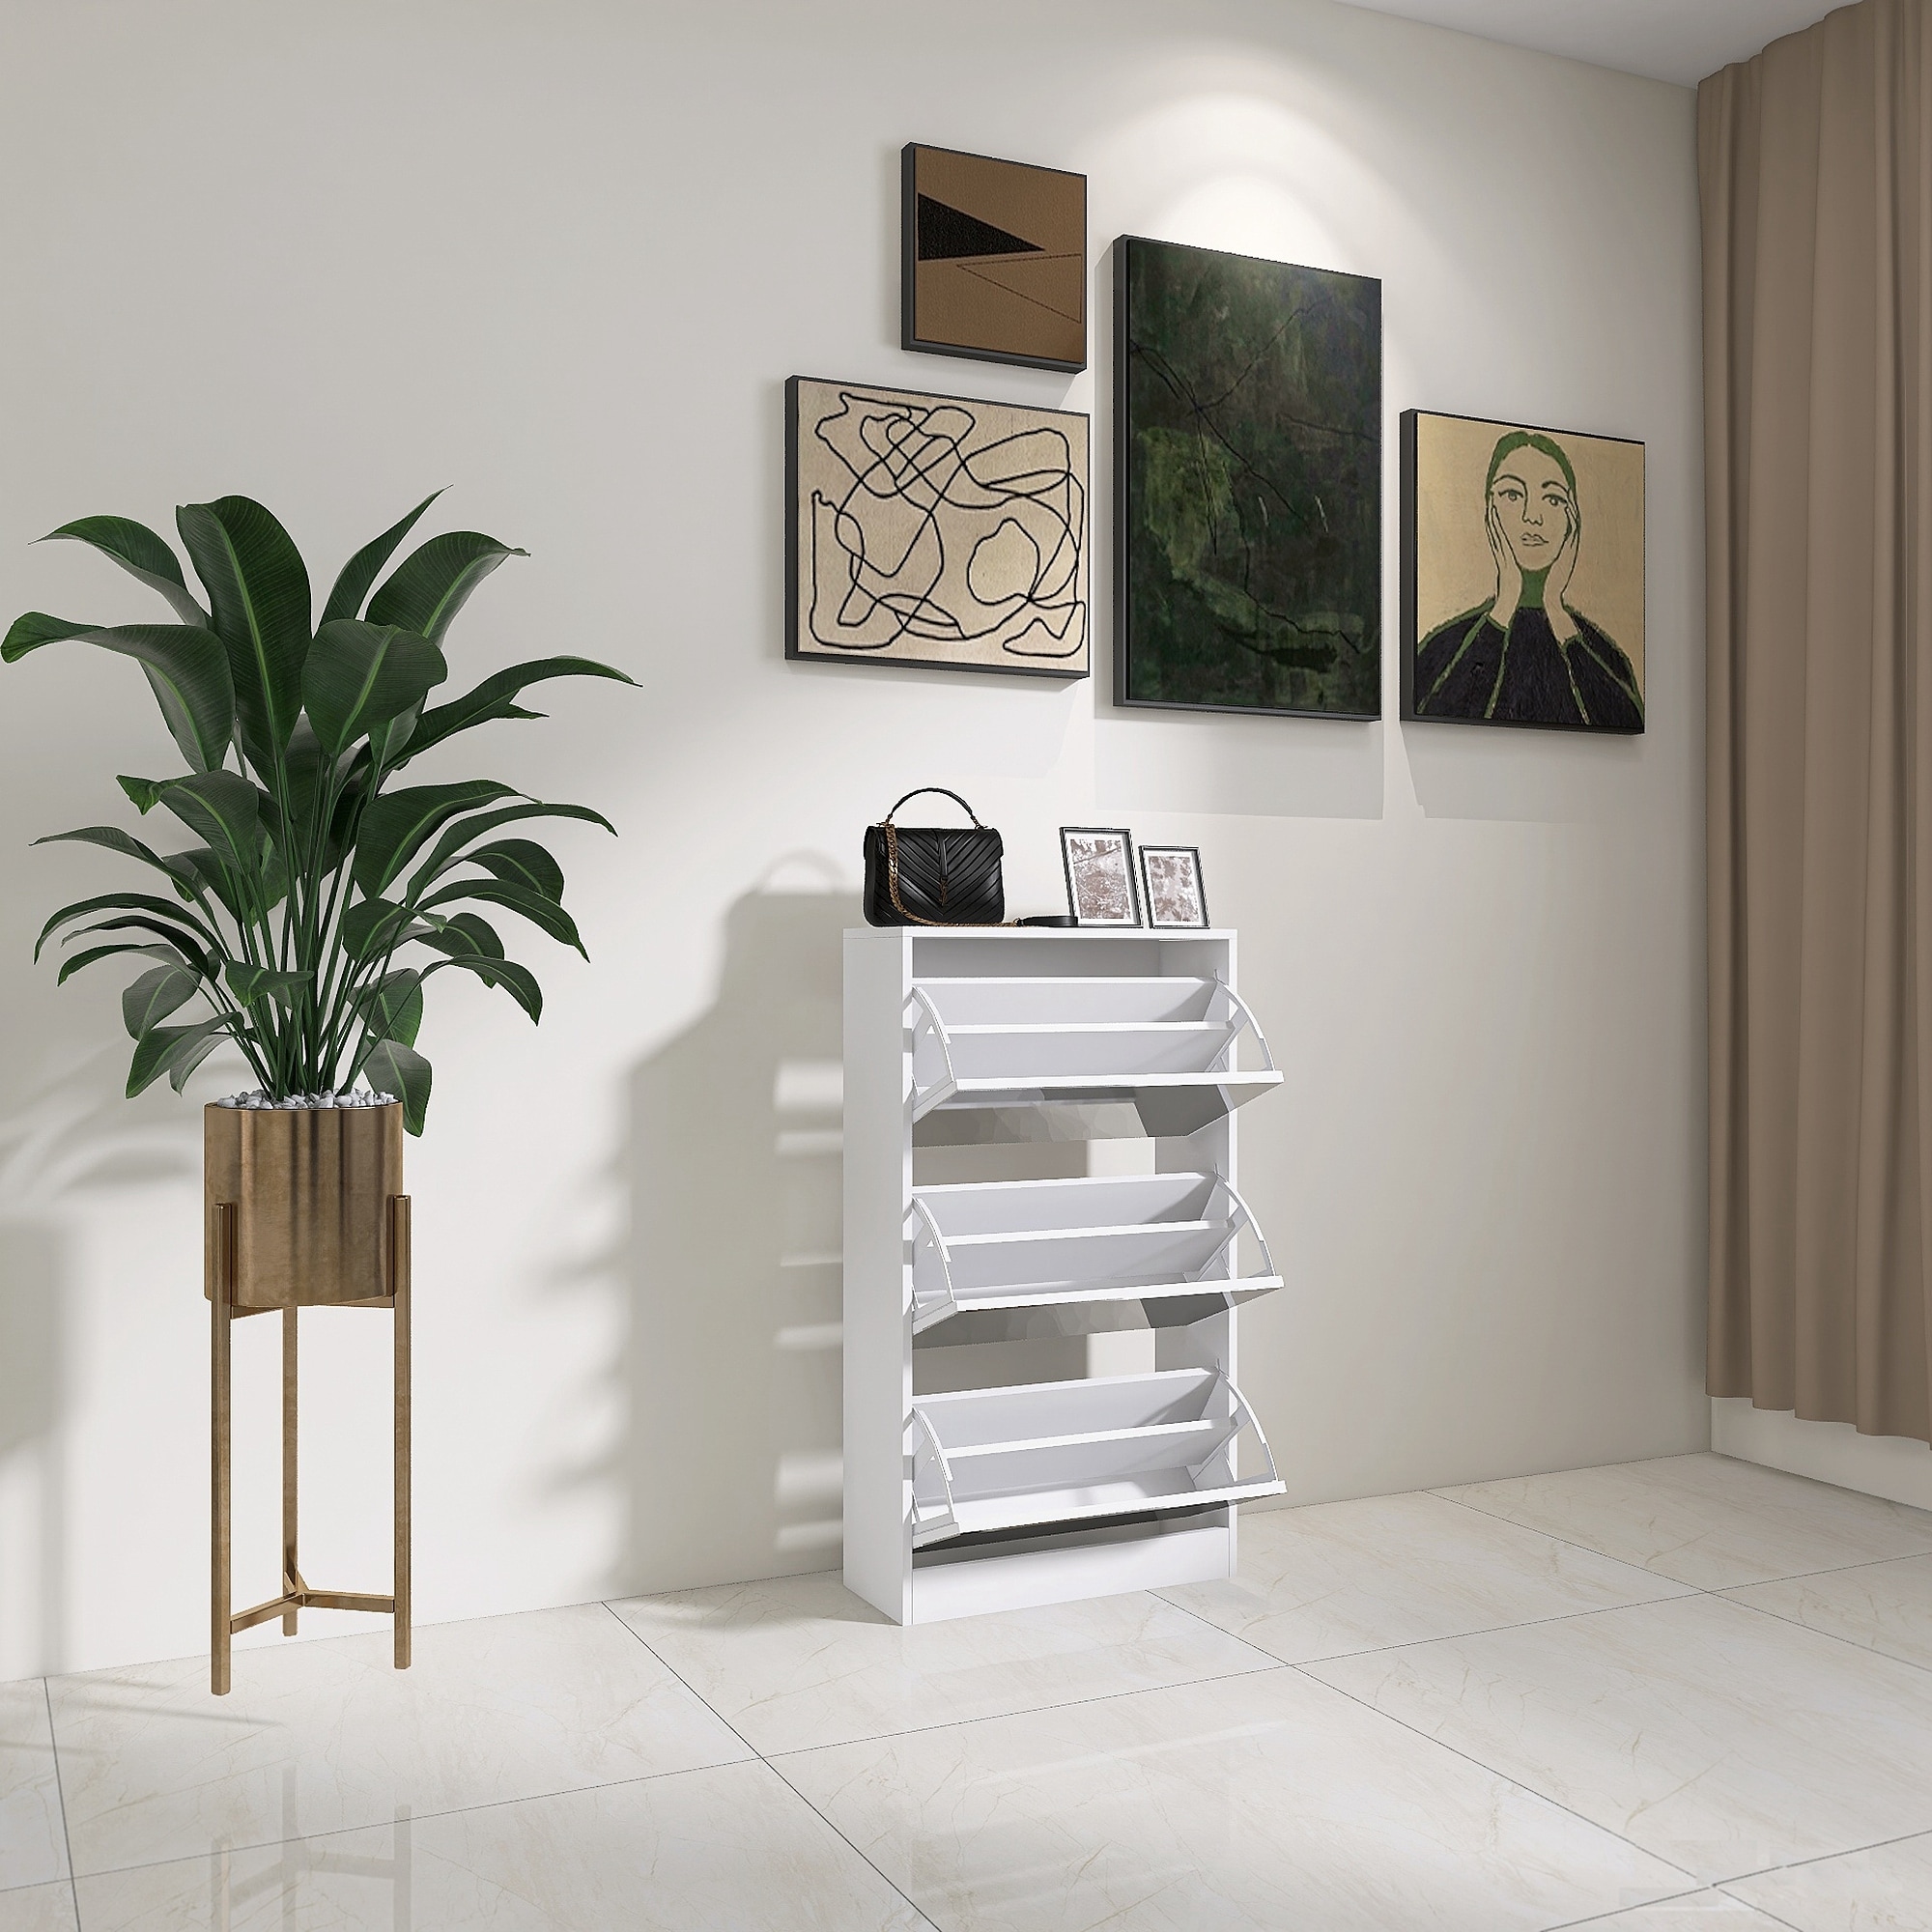 White Swivel Shoe Cabinet with Doors 3-Tier Modern Entryway Shoe